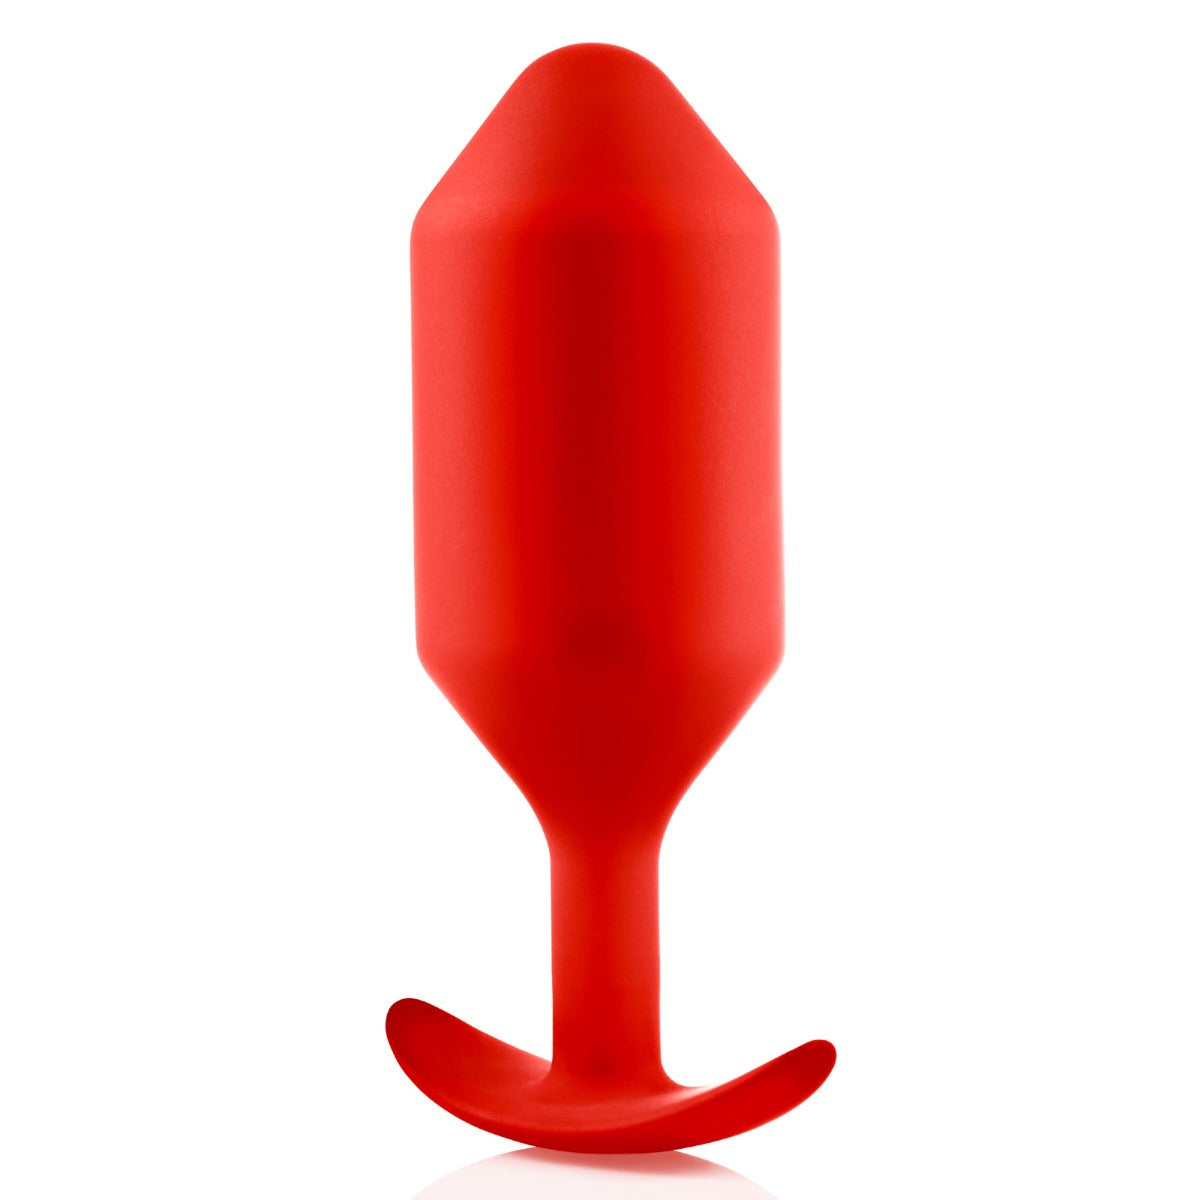 b-Vibe Snug Plug 6 Vibrating Butt Plug Red (8182586605807)